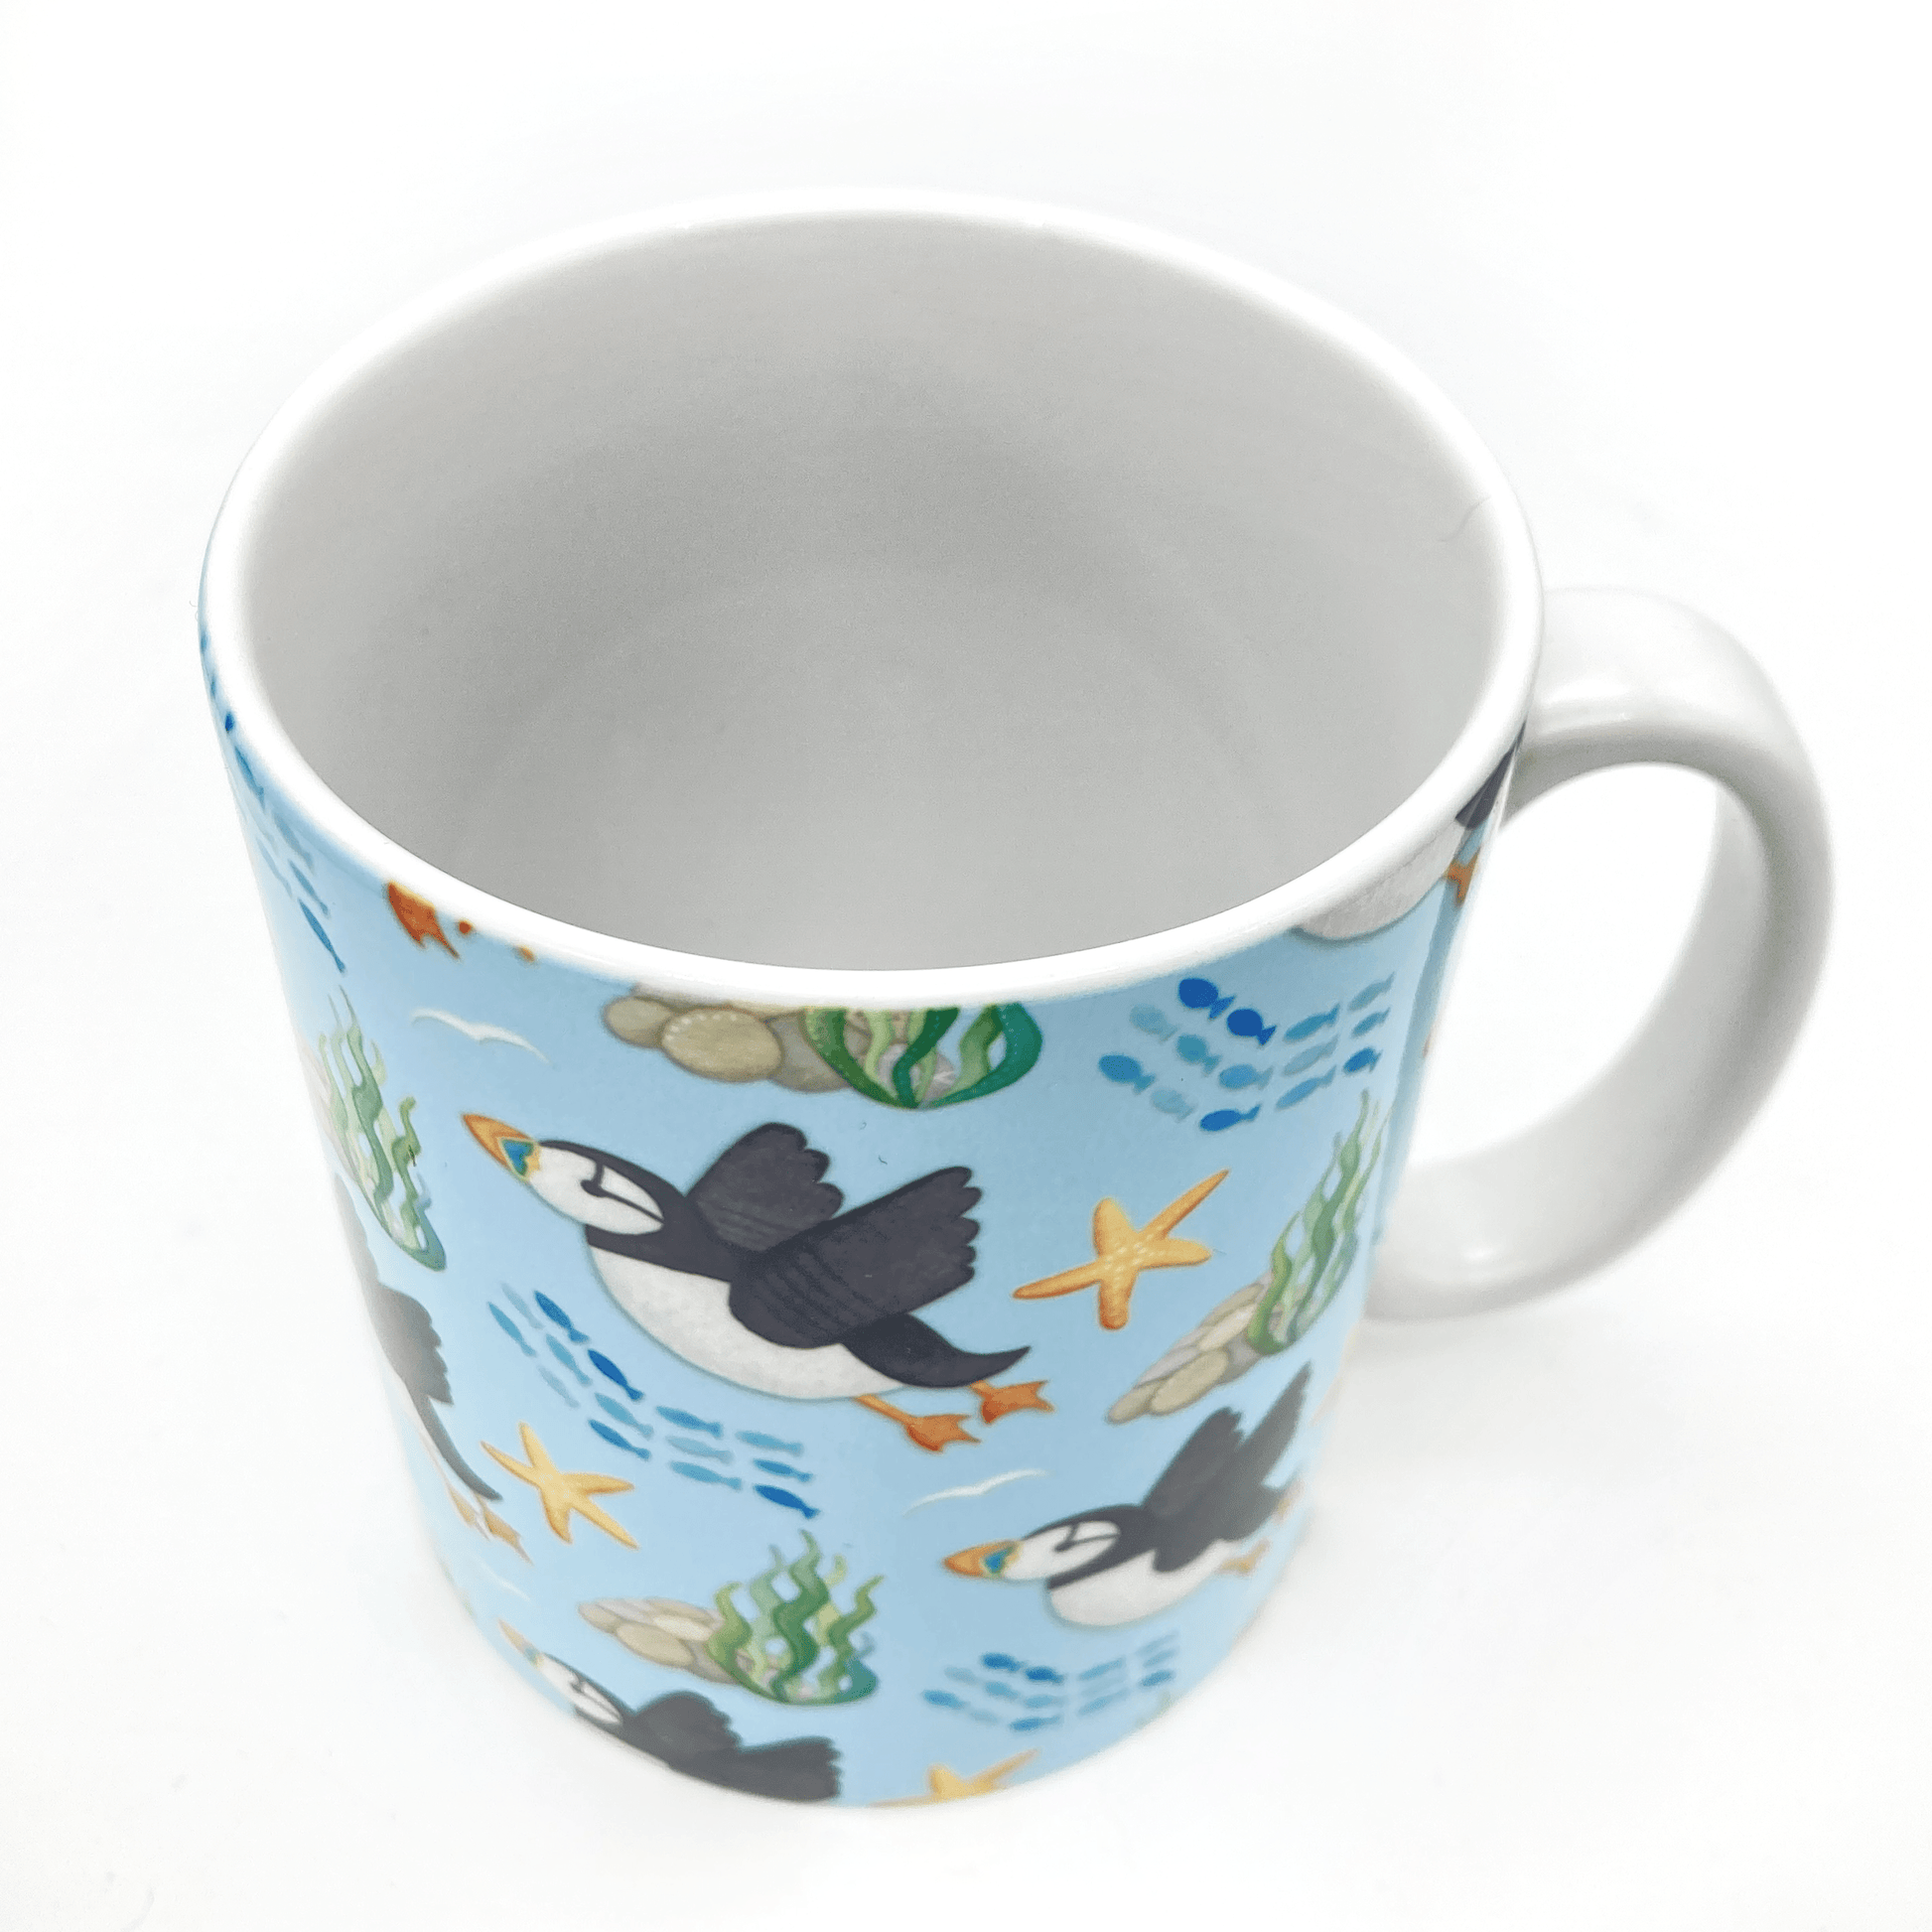 Puffin Pattern Mug - Flying Puffins - Seaside Ceramic Mug - East Neuk Beach Crafts